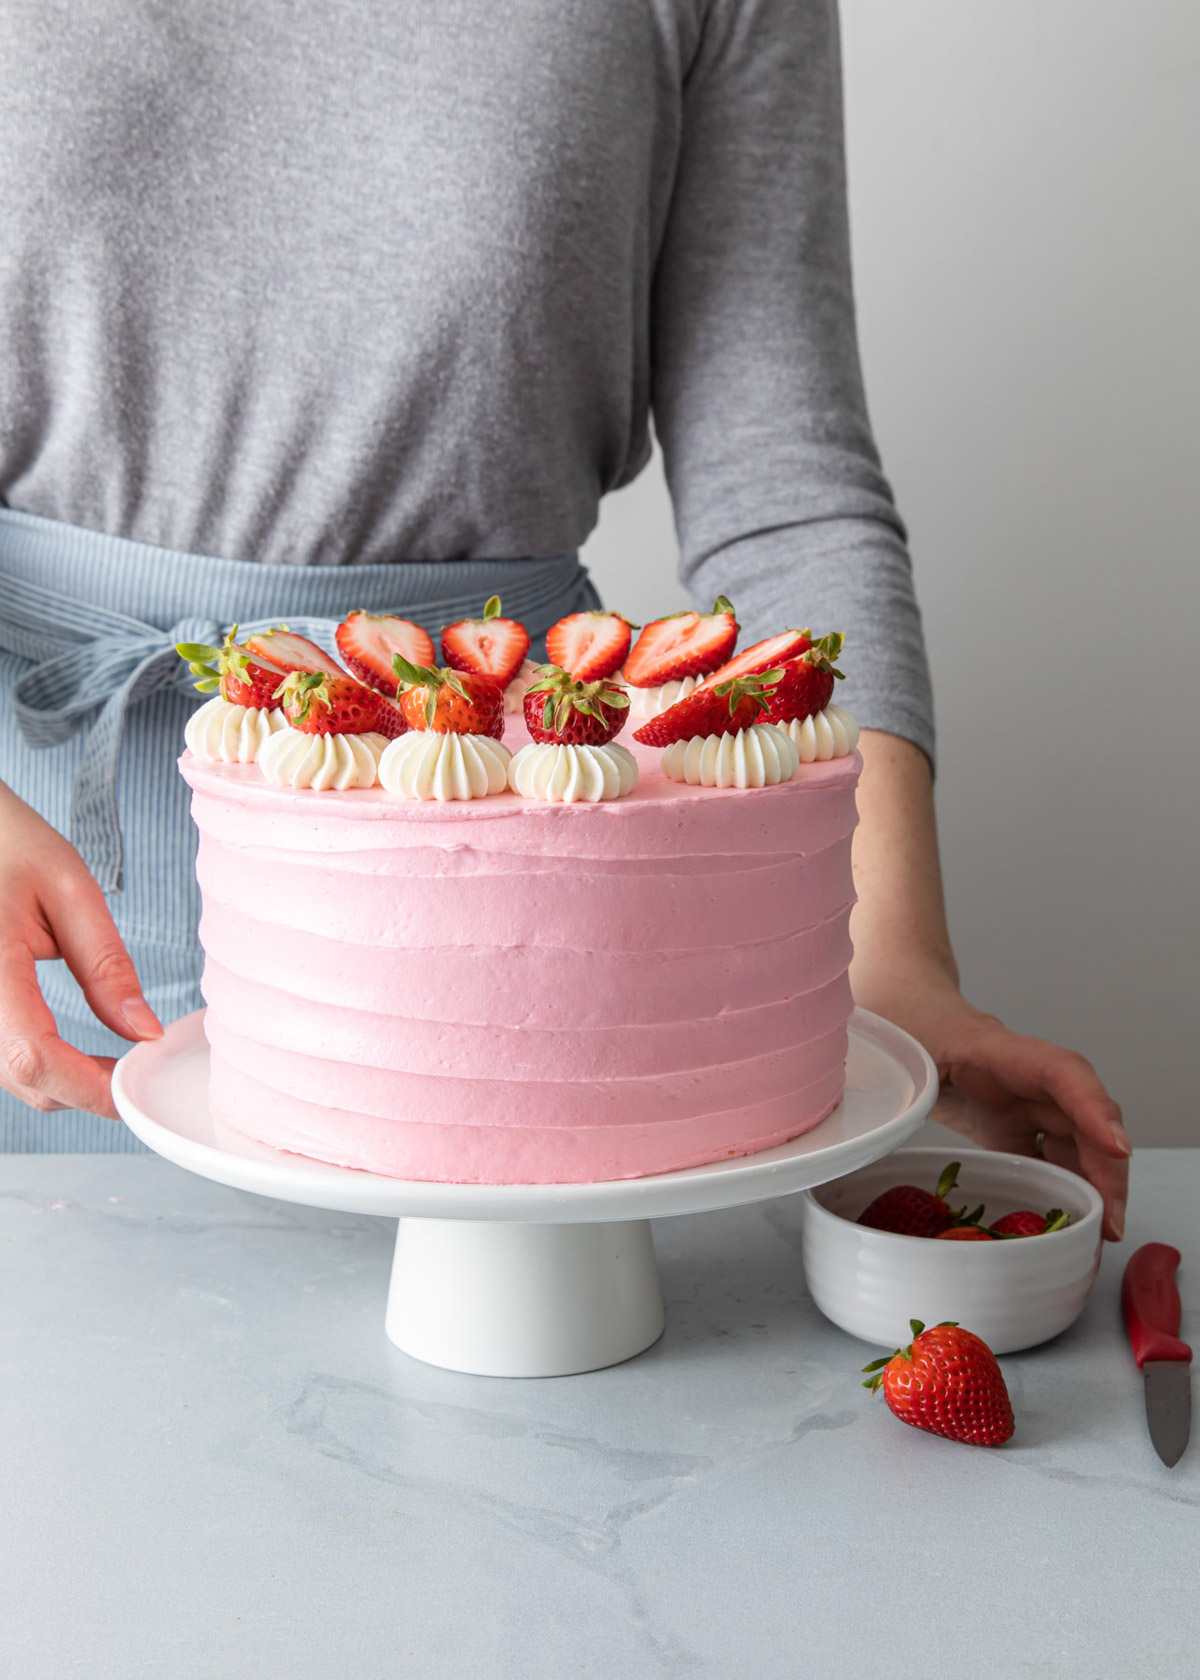 Preparing a three-layer strawberry cake